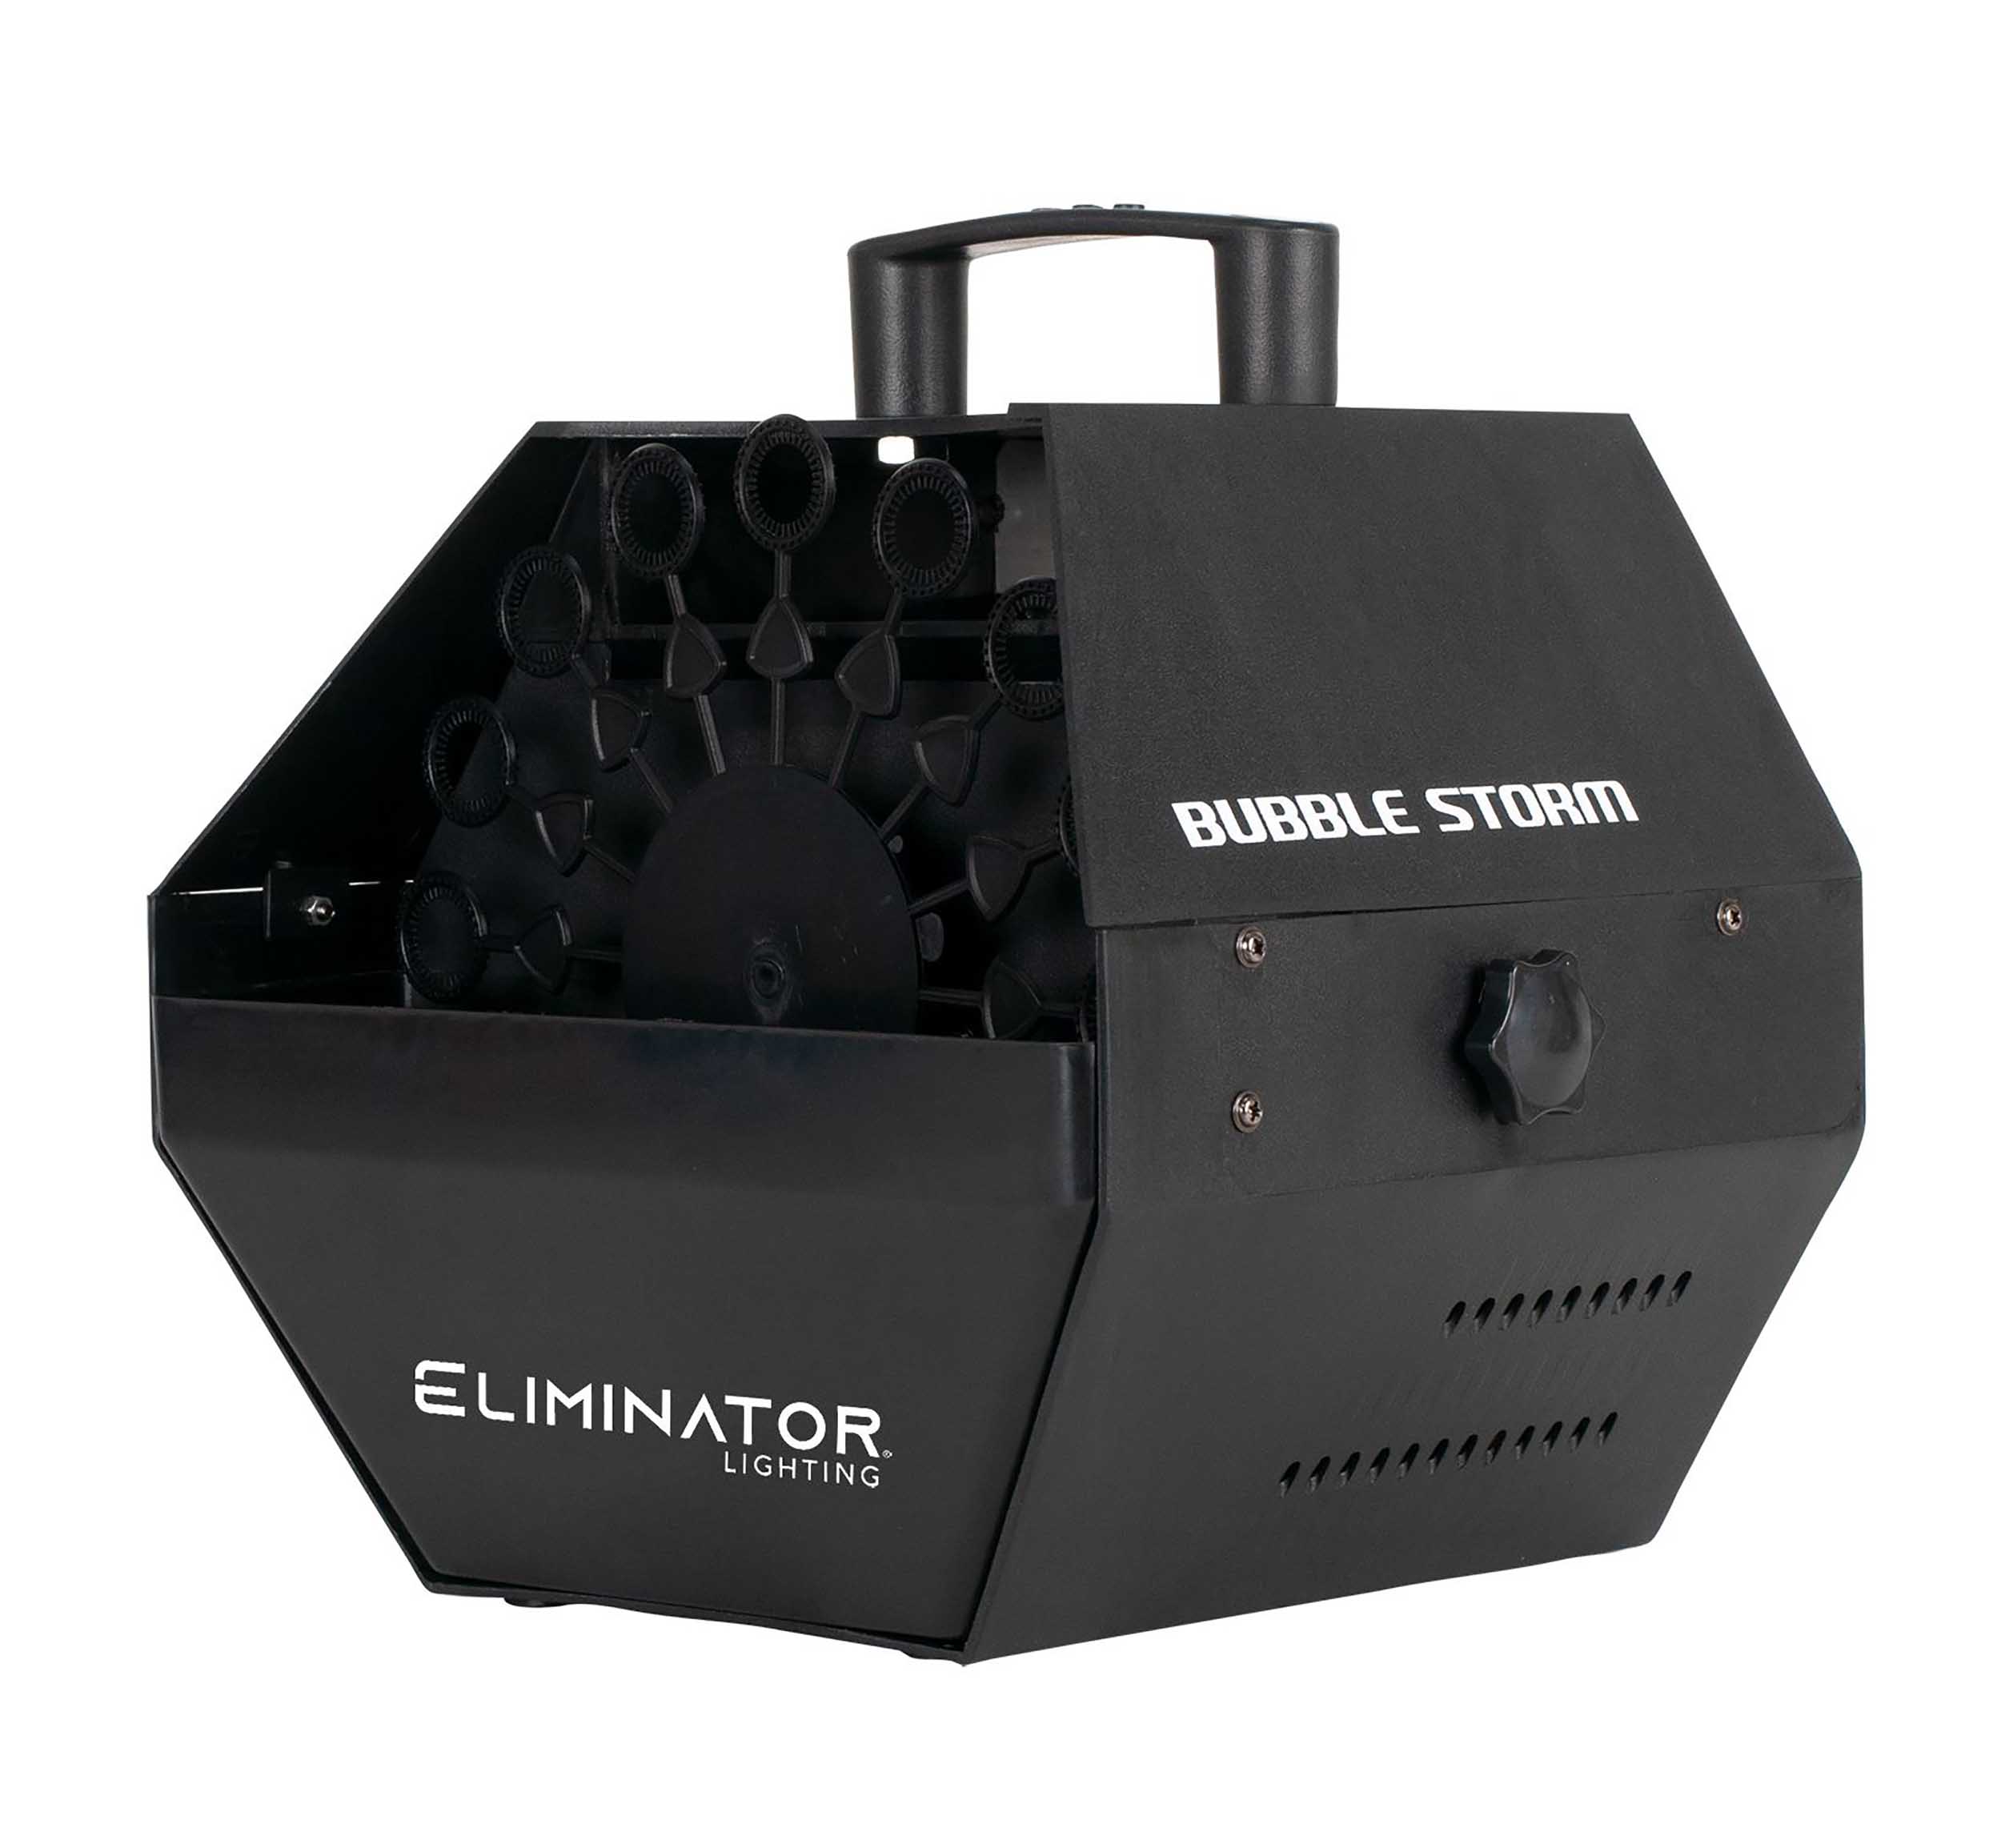 Eliminator Lighting Bubble Storm Bubble Effects Machine - Black by Eliminator Lighting